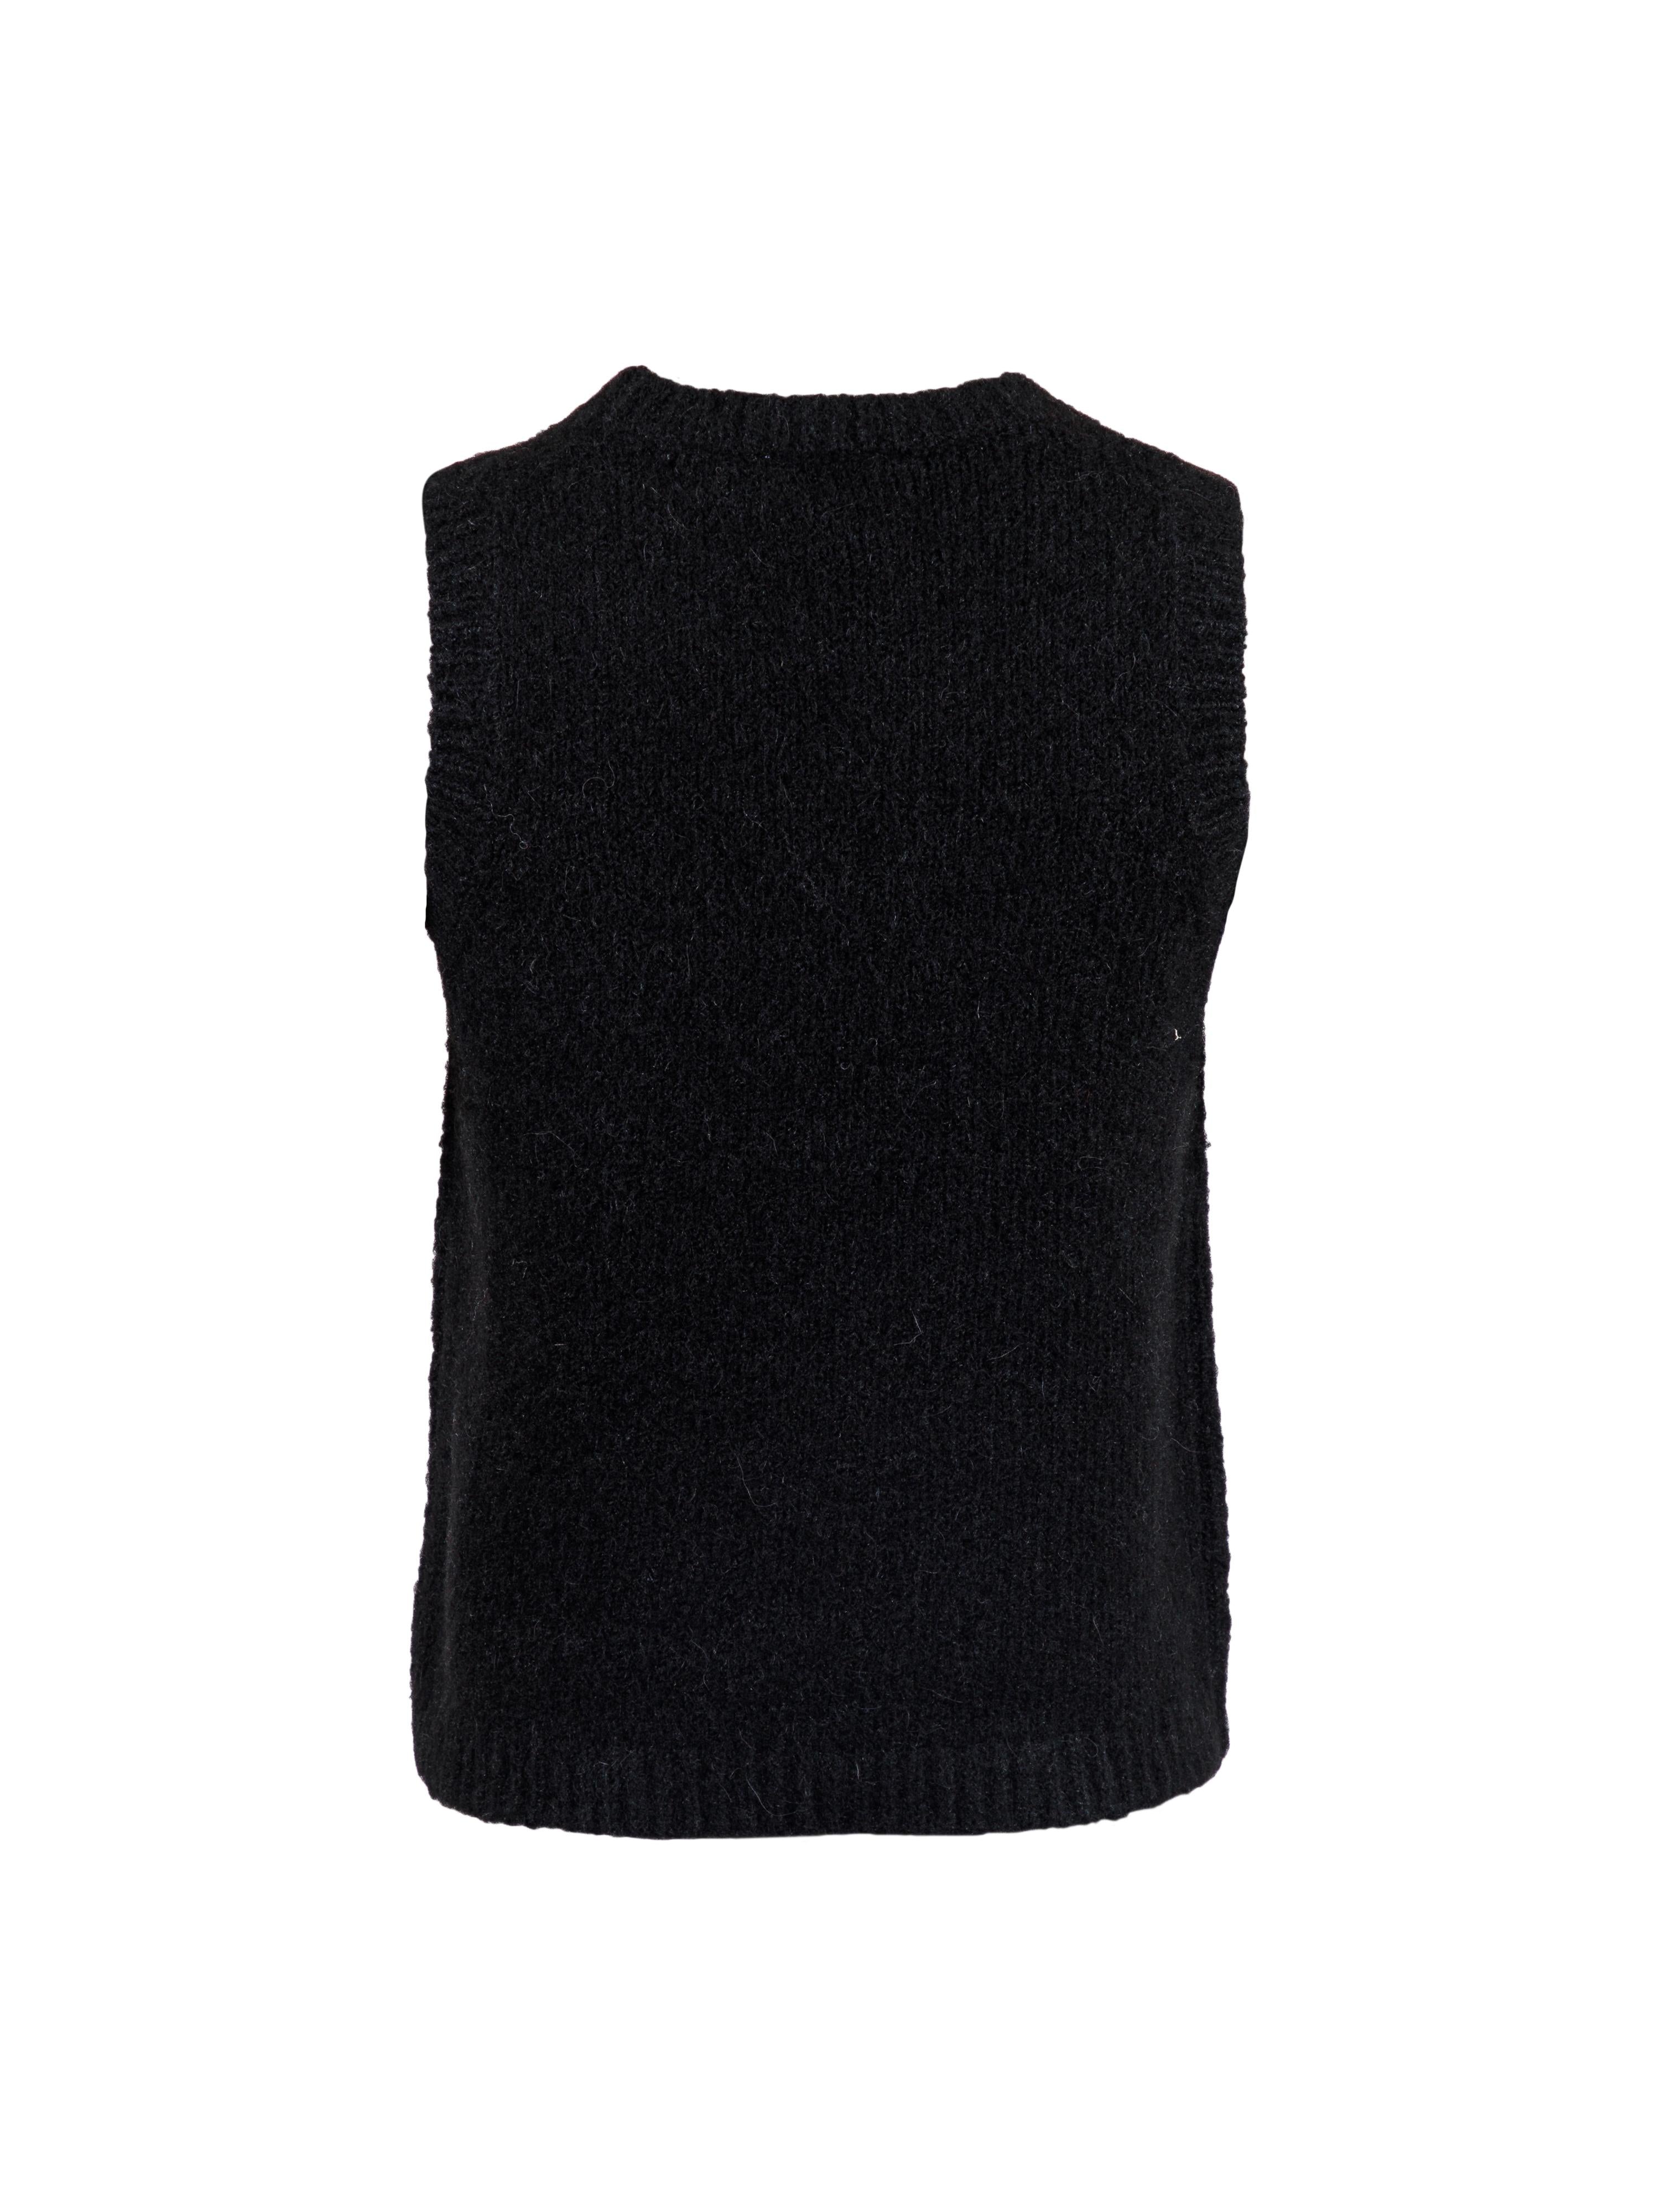 Franko Knit Waistcoat - Black - Neo Noir - Gensere - VILLOID.no